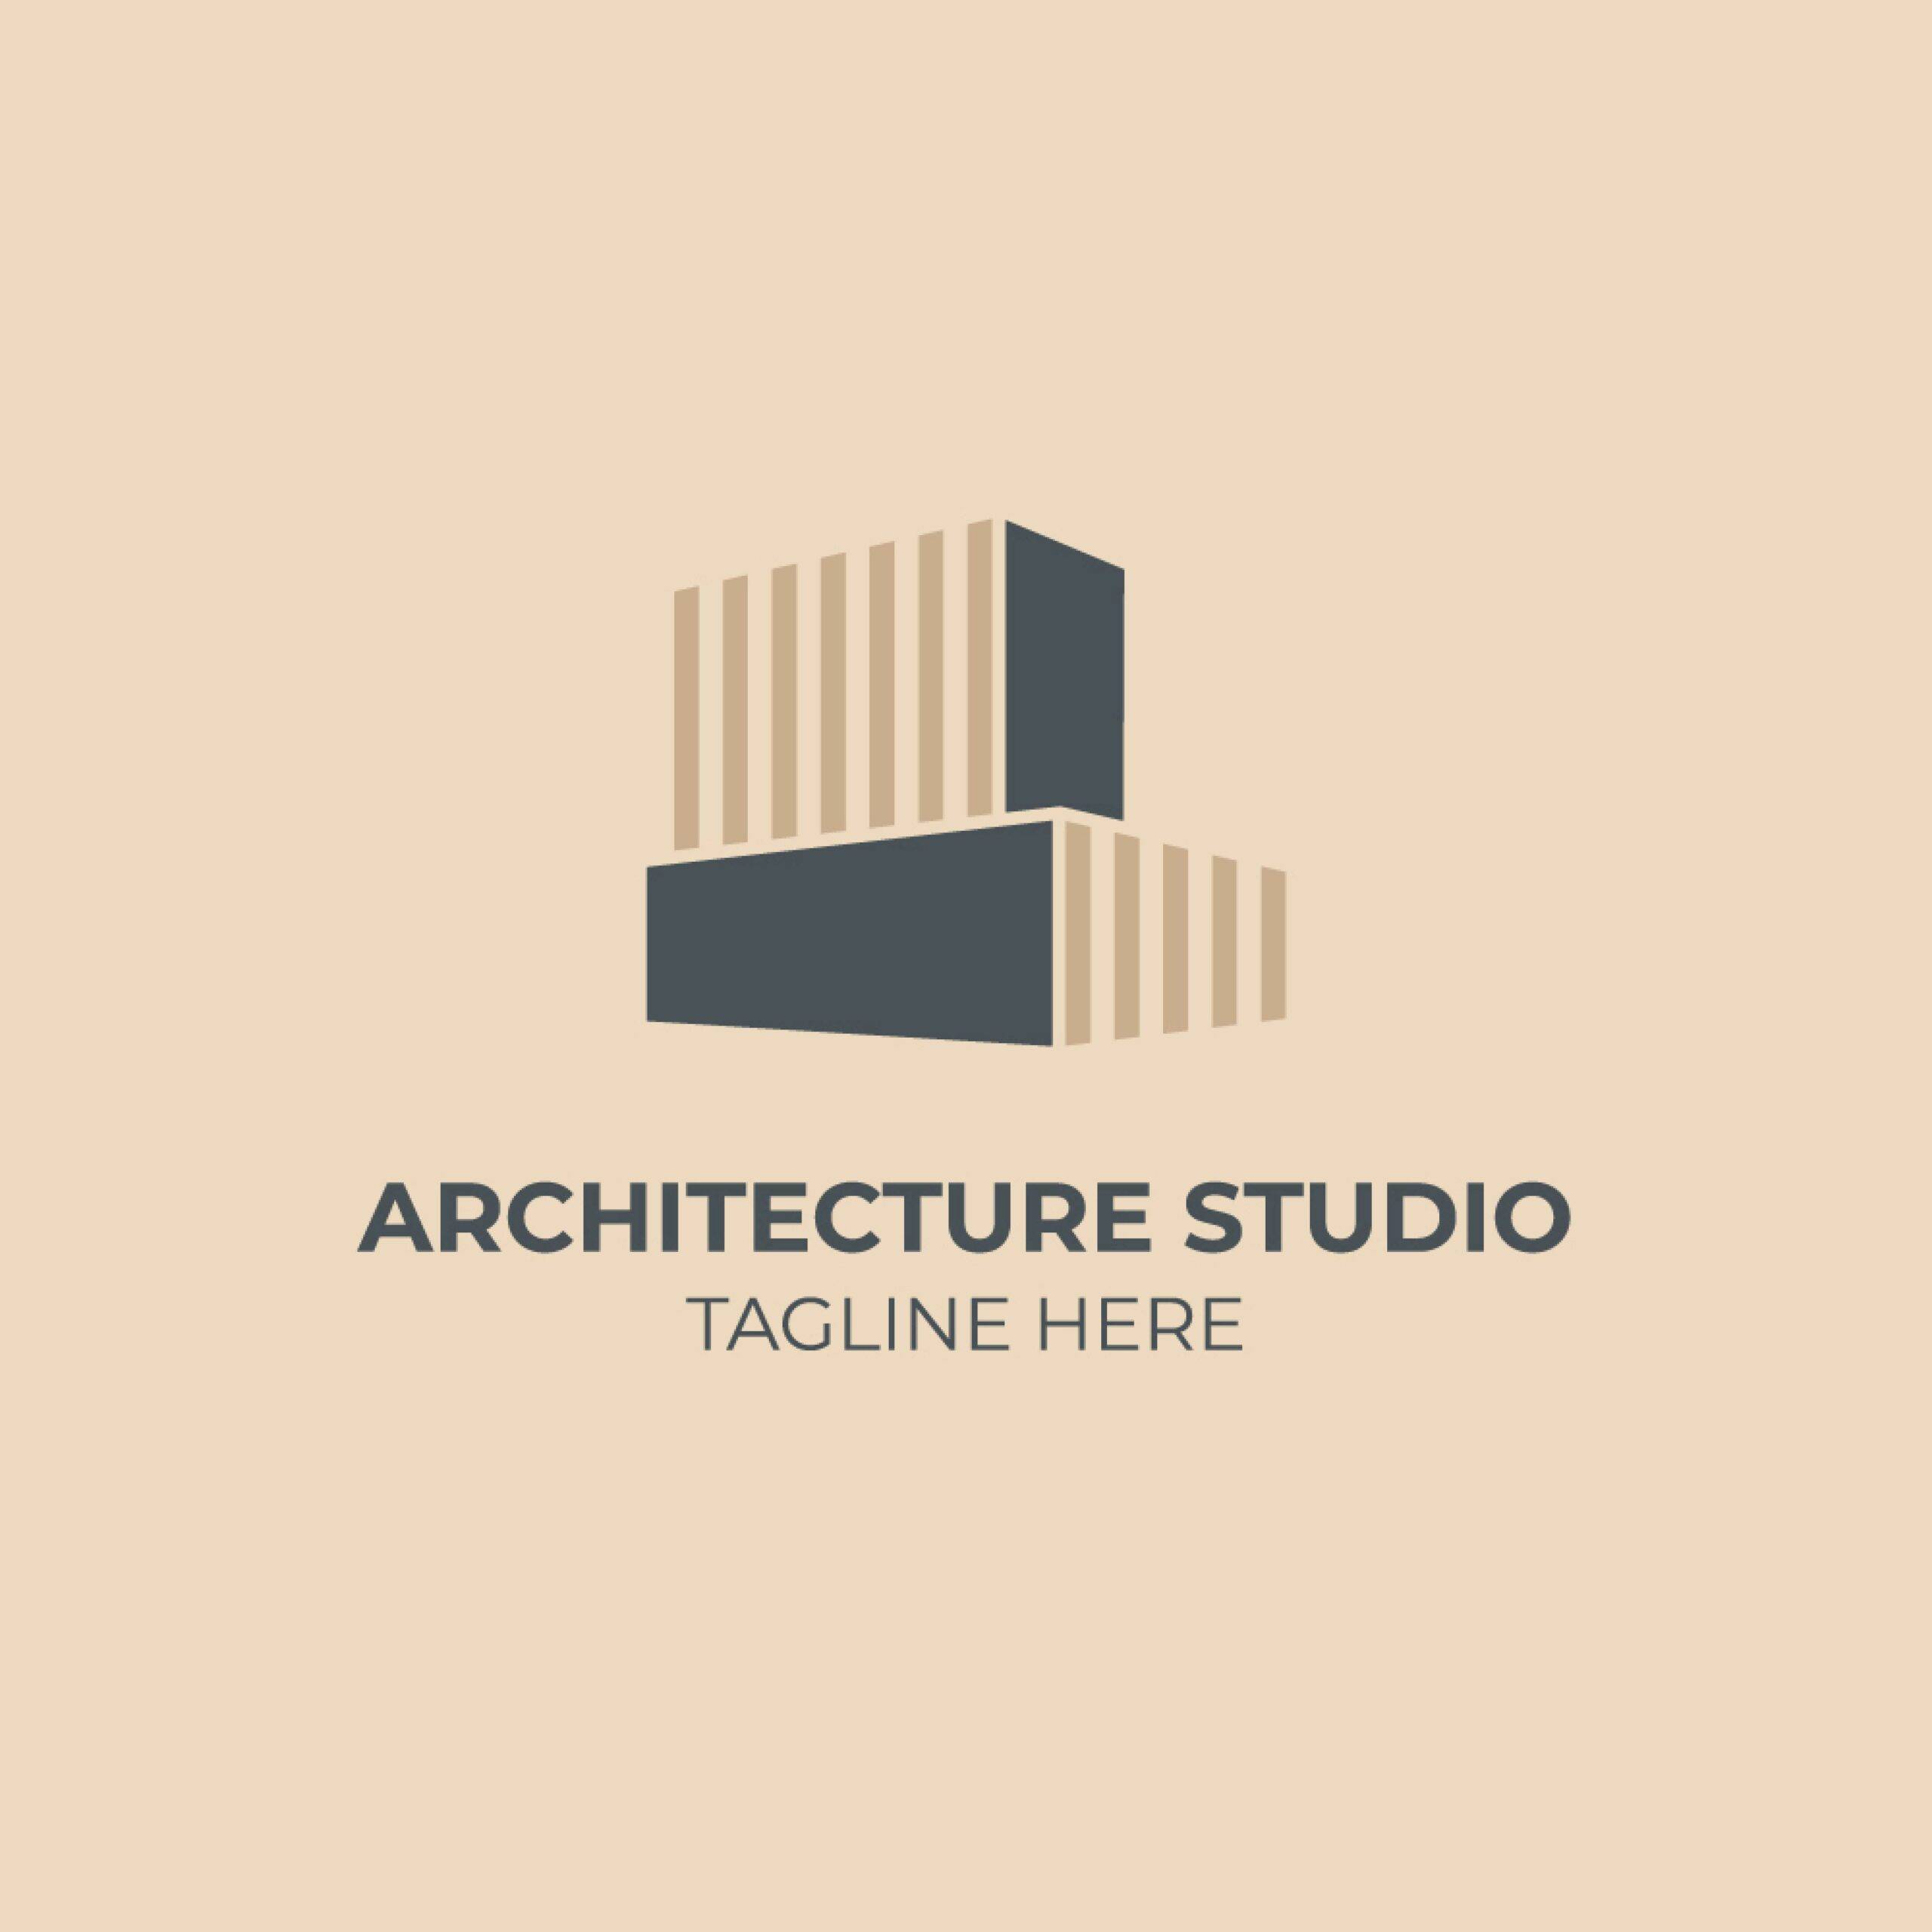 Modern architecture studio logo design